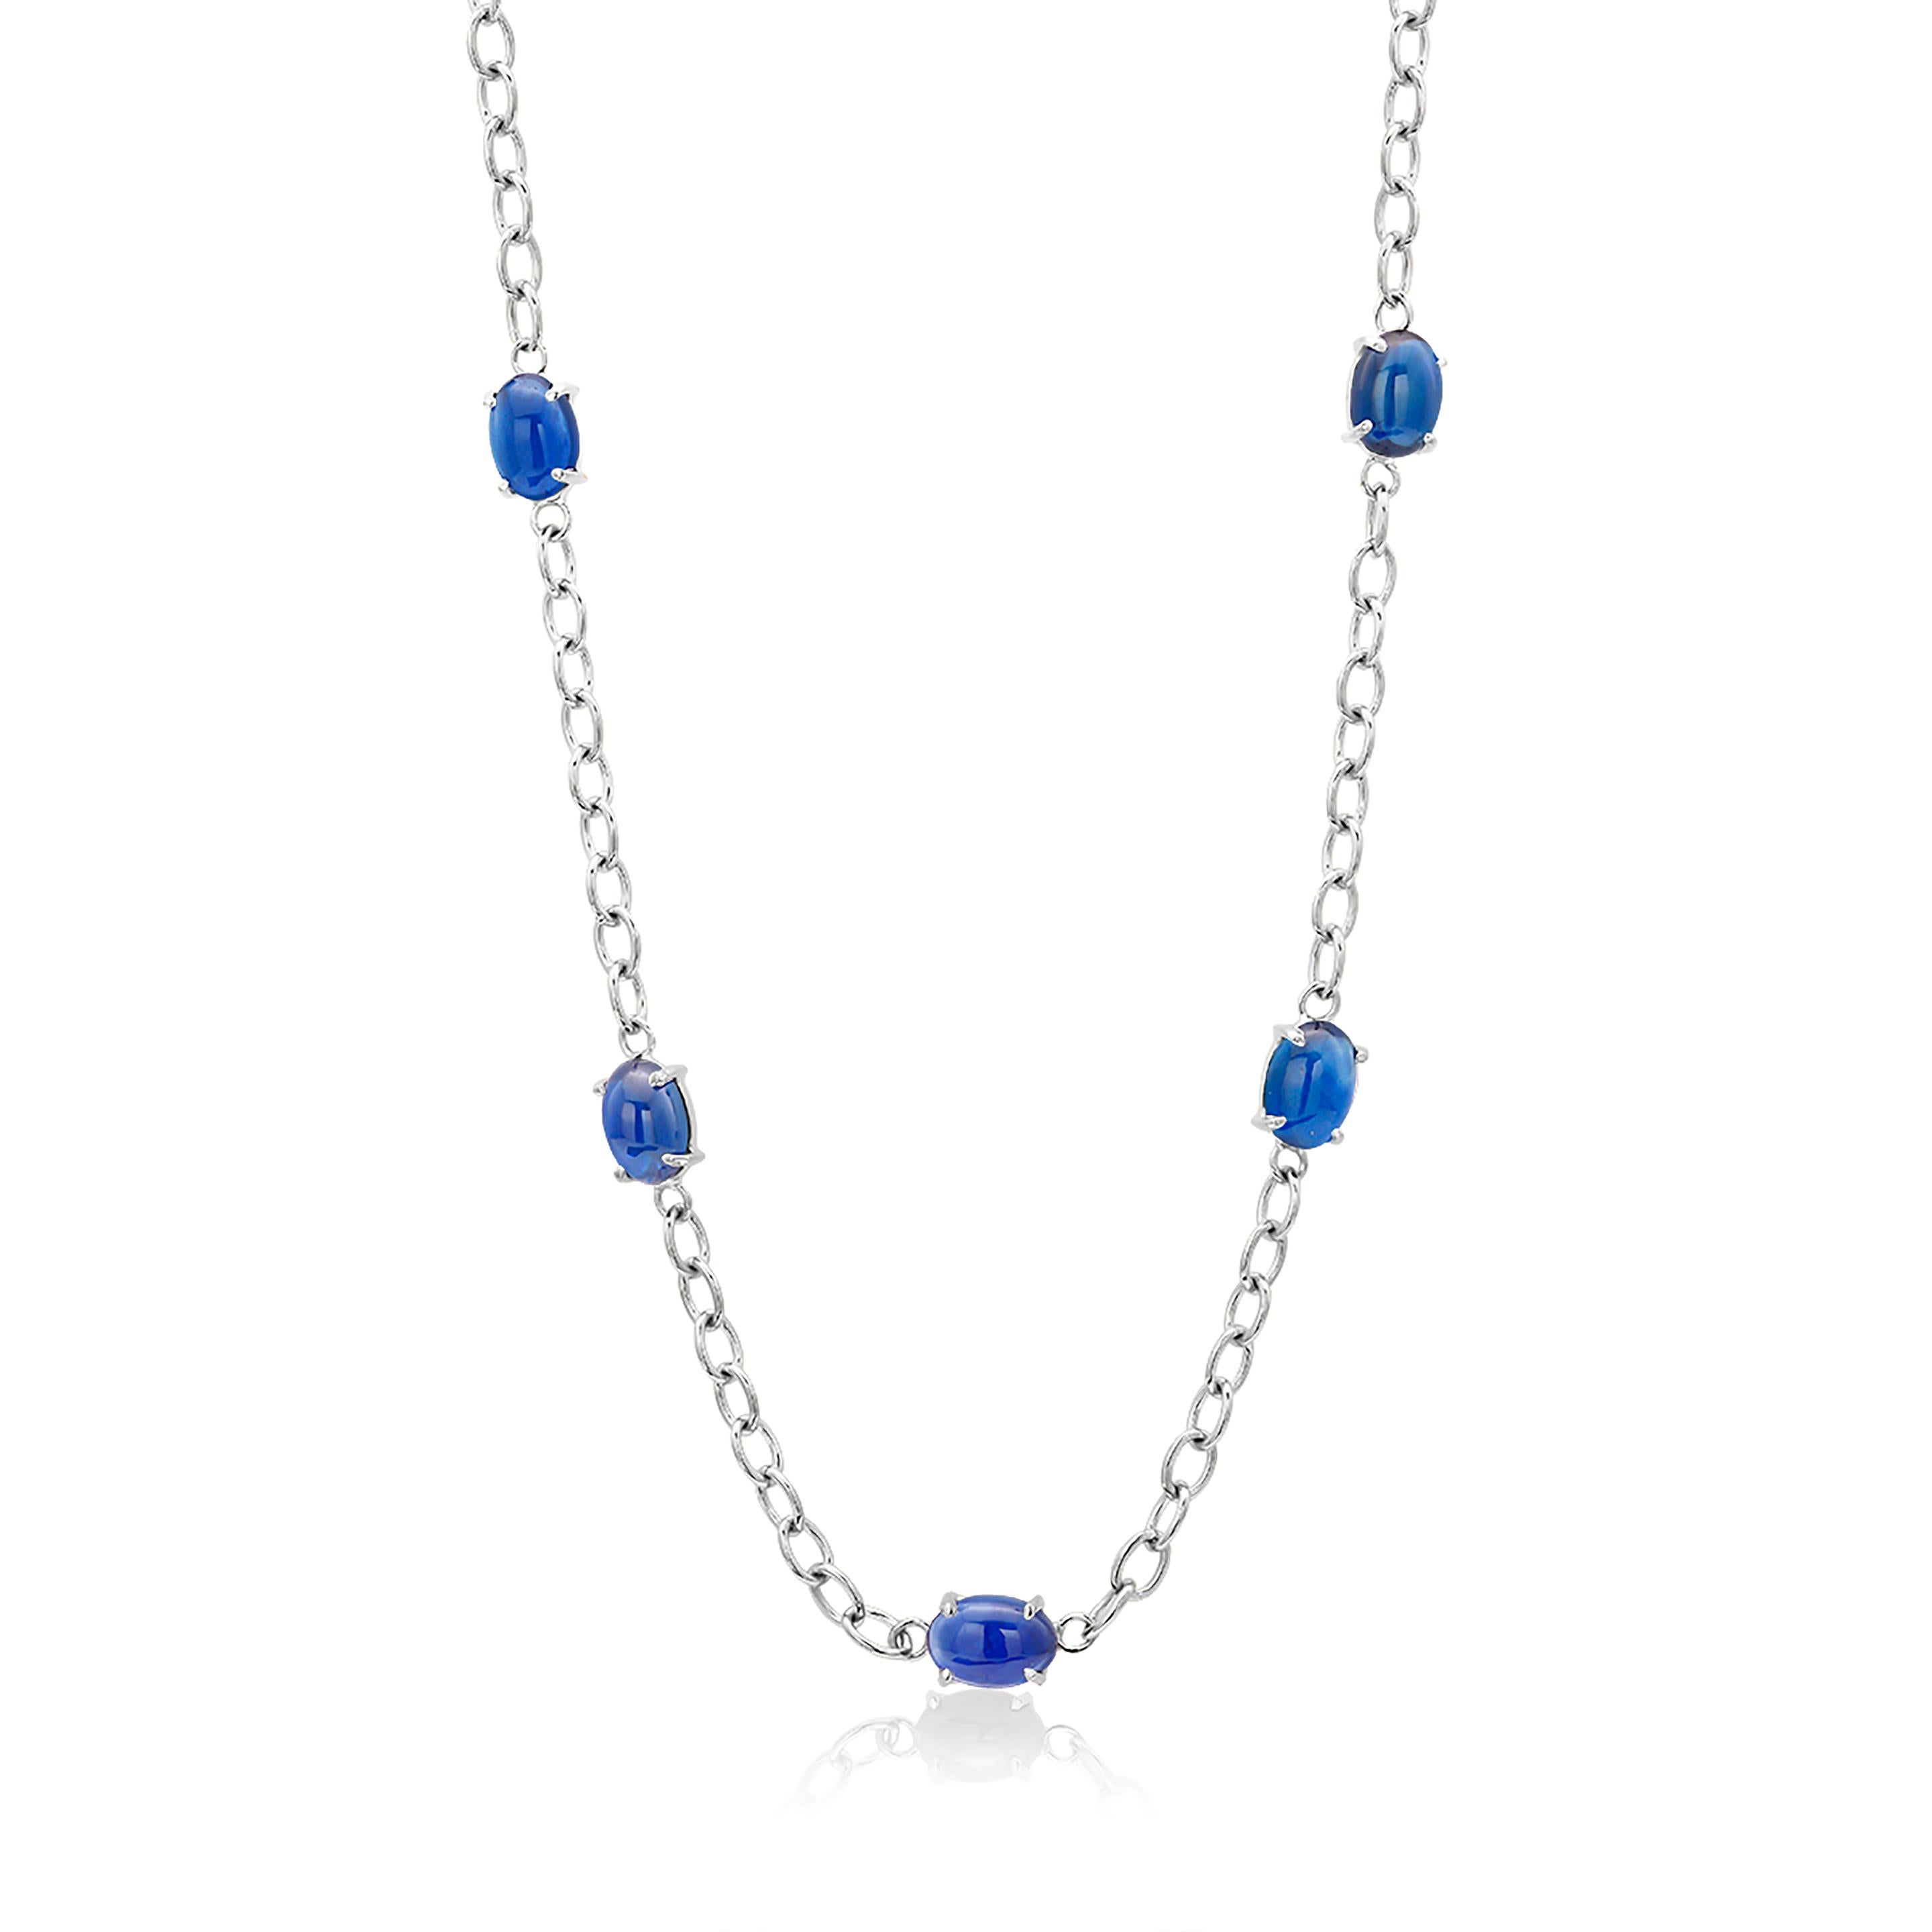 Women's or Men's Eighteen Karats White Gold Five Cabochon Sapphires Necklace Pendant